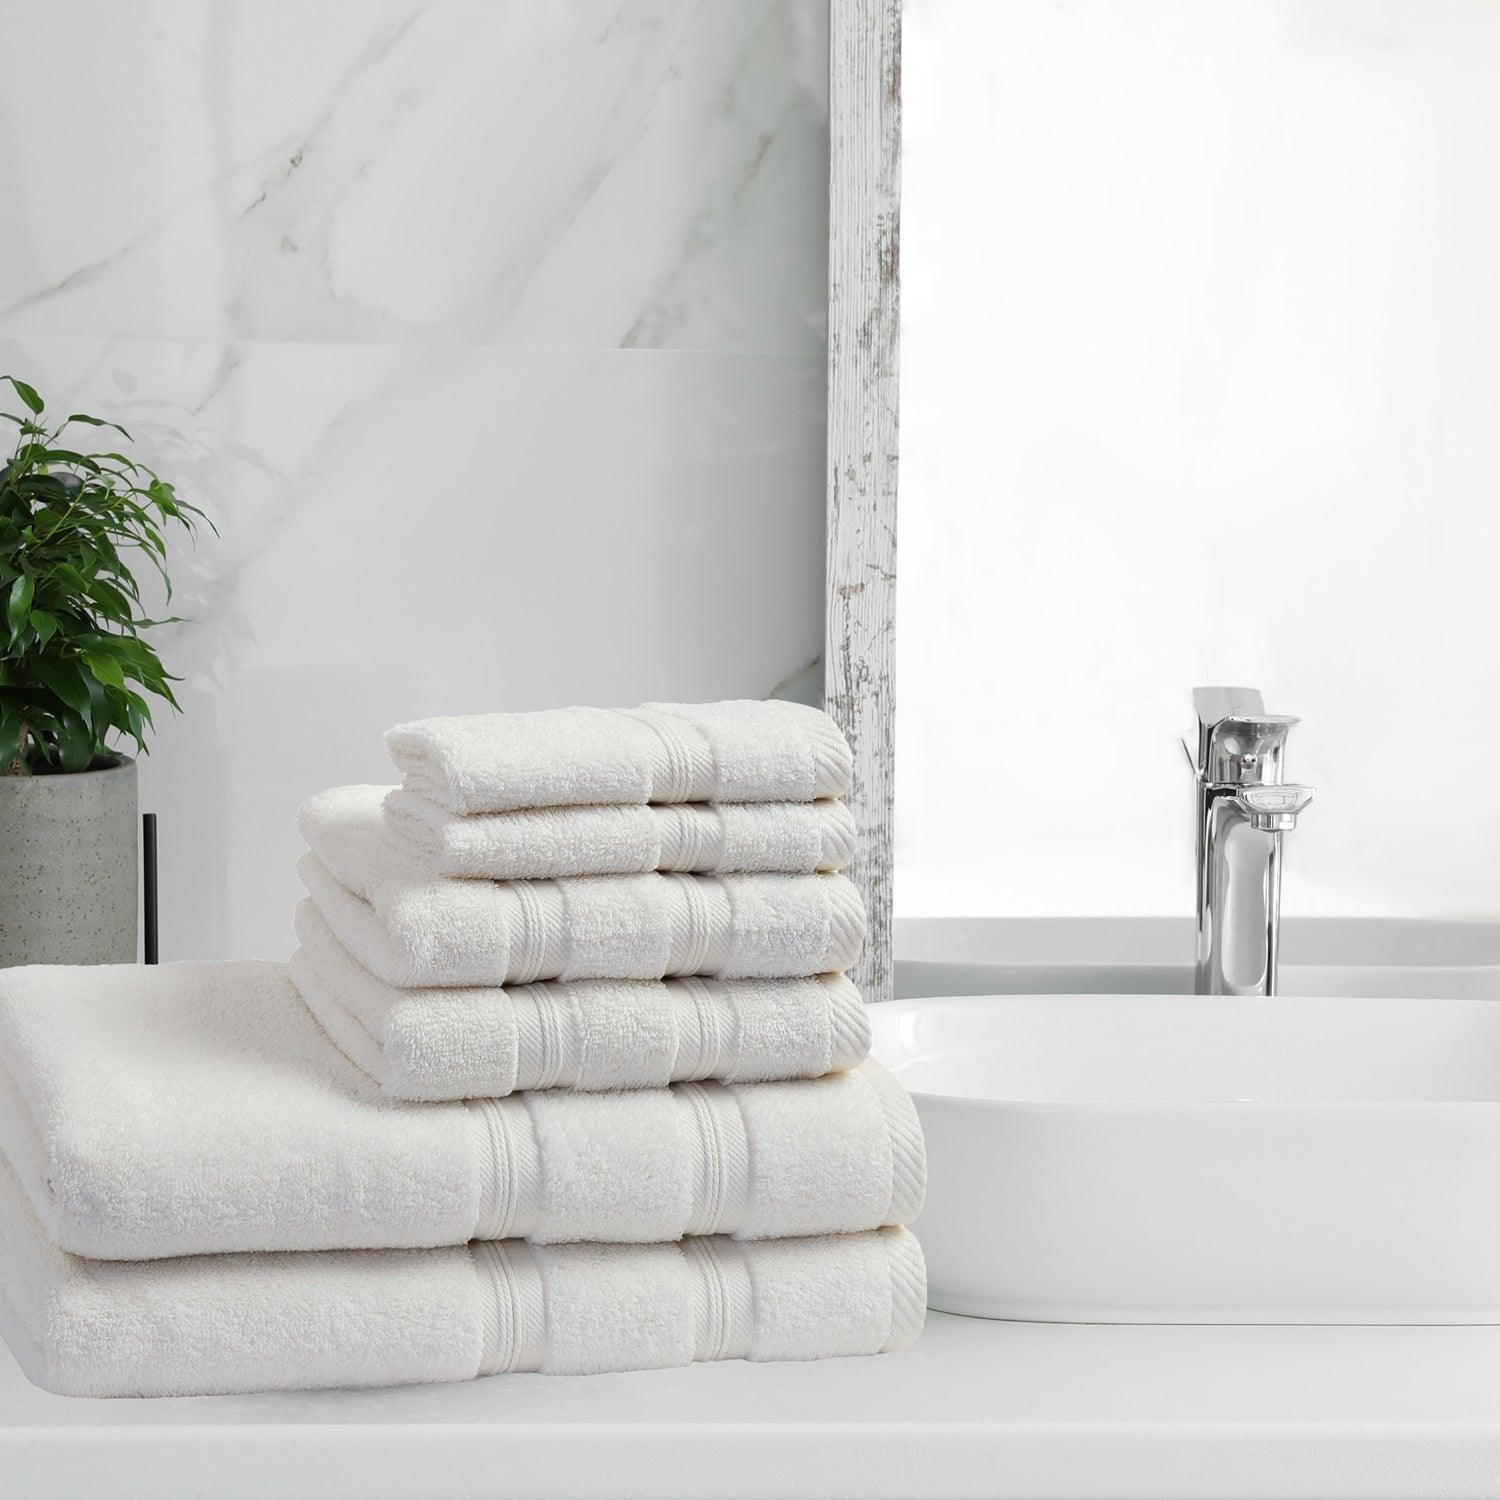 Superior Zero-Twist Cotton 2-pc. Bath Towel Set Brick